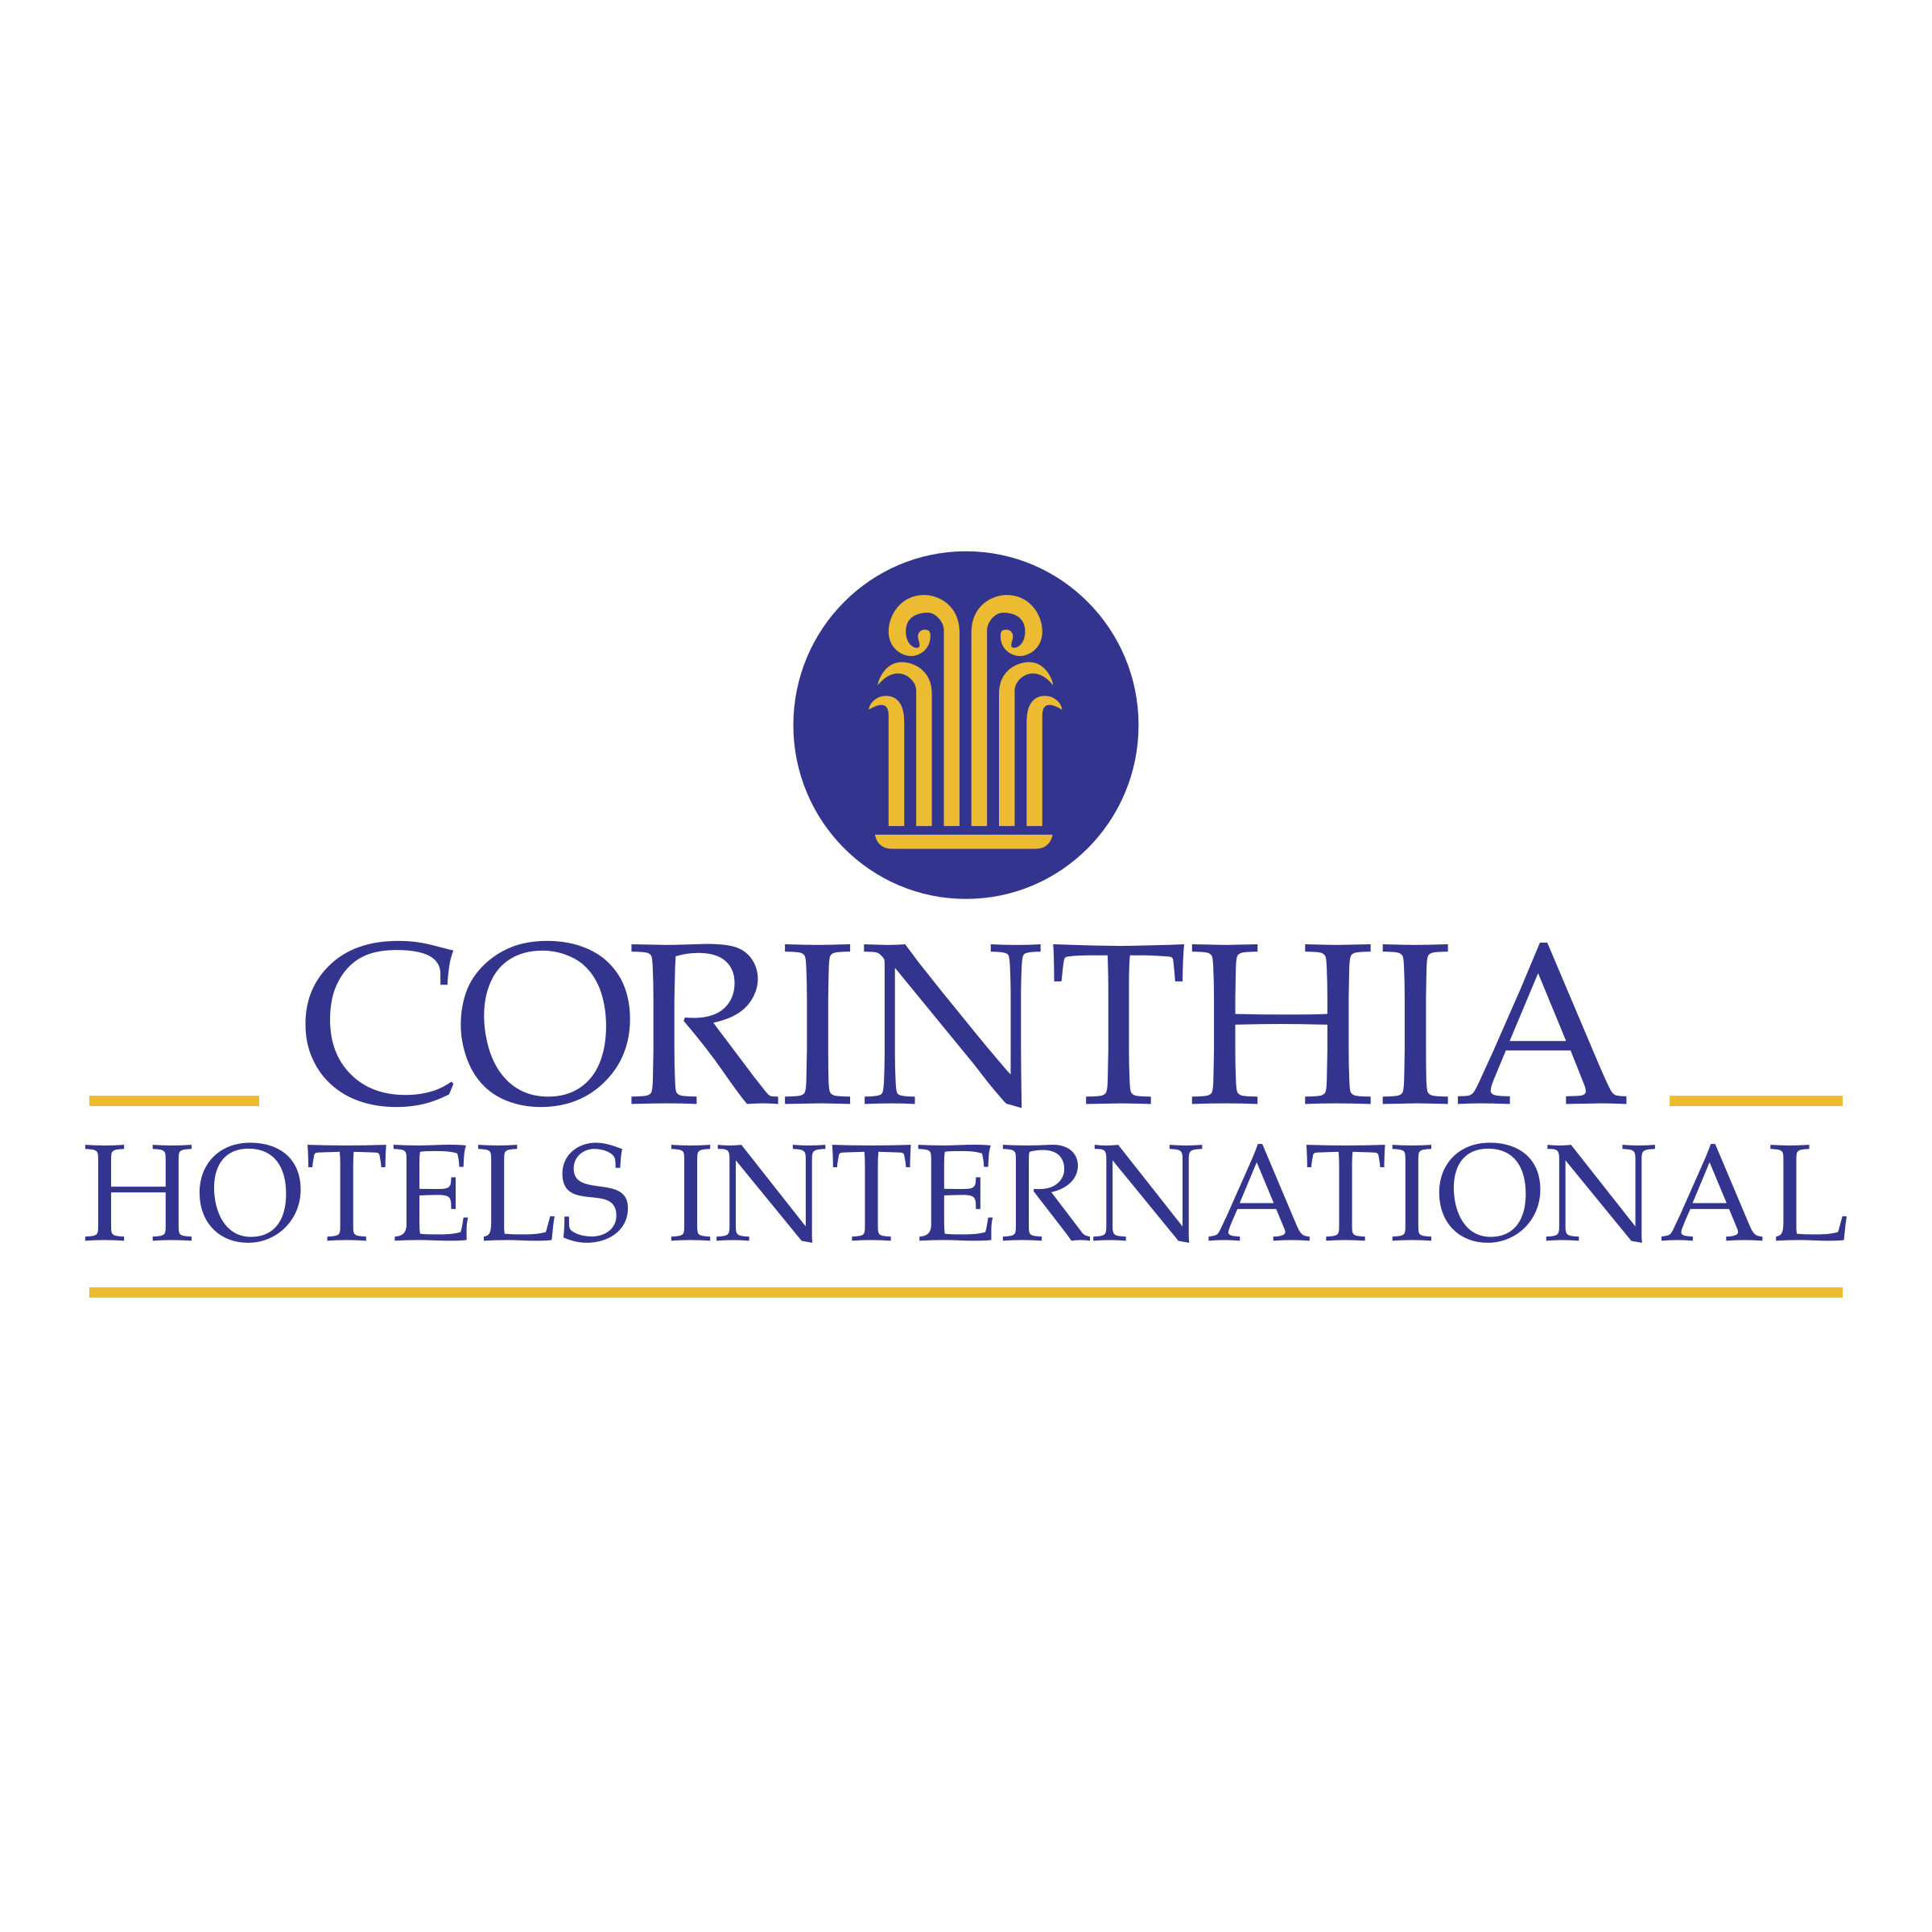 Hotels International Logo - Corinthia Hotel International Logo PNG Transparent & SVG Vector